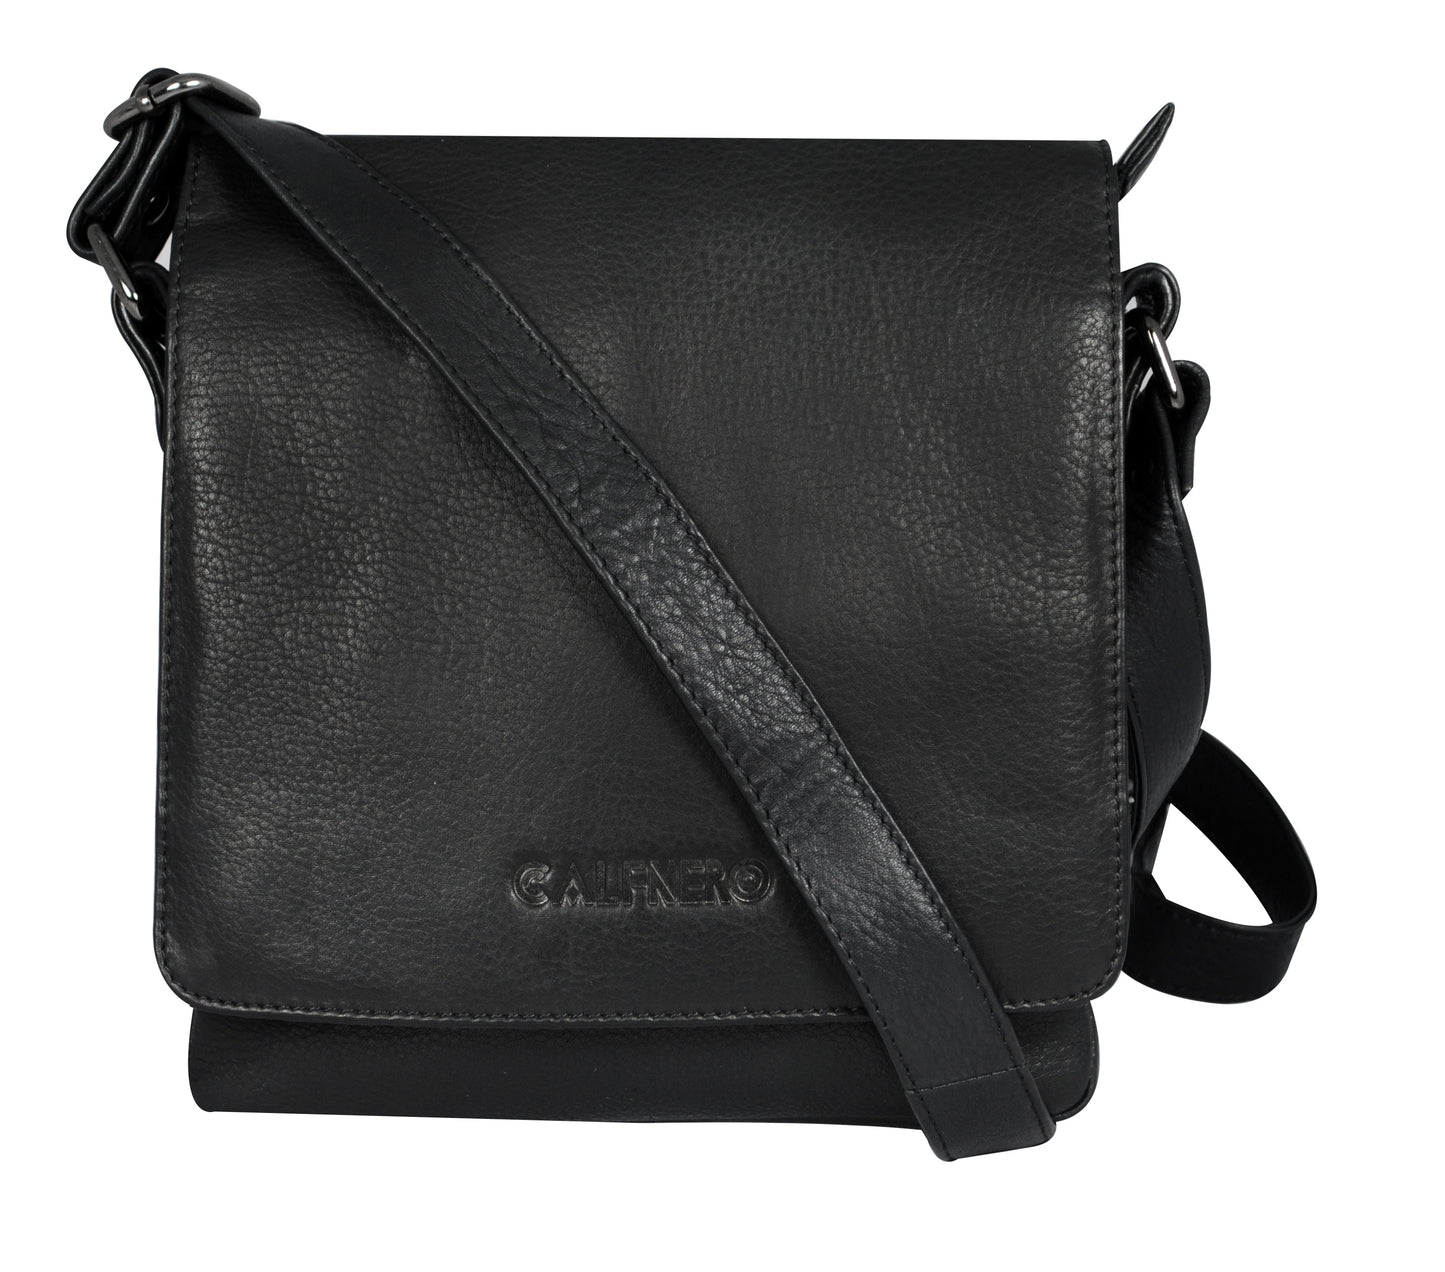 Calfnero Genuine Leather Women's Sling Bag (812-Black)